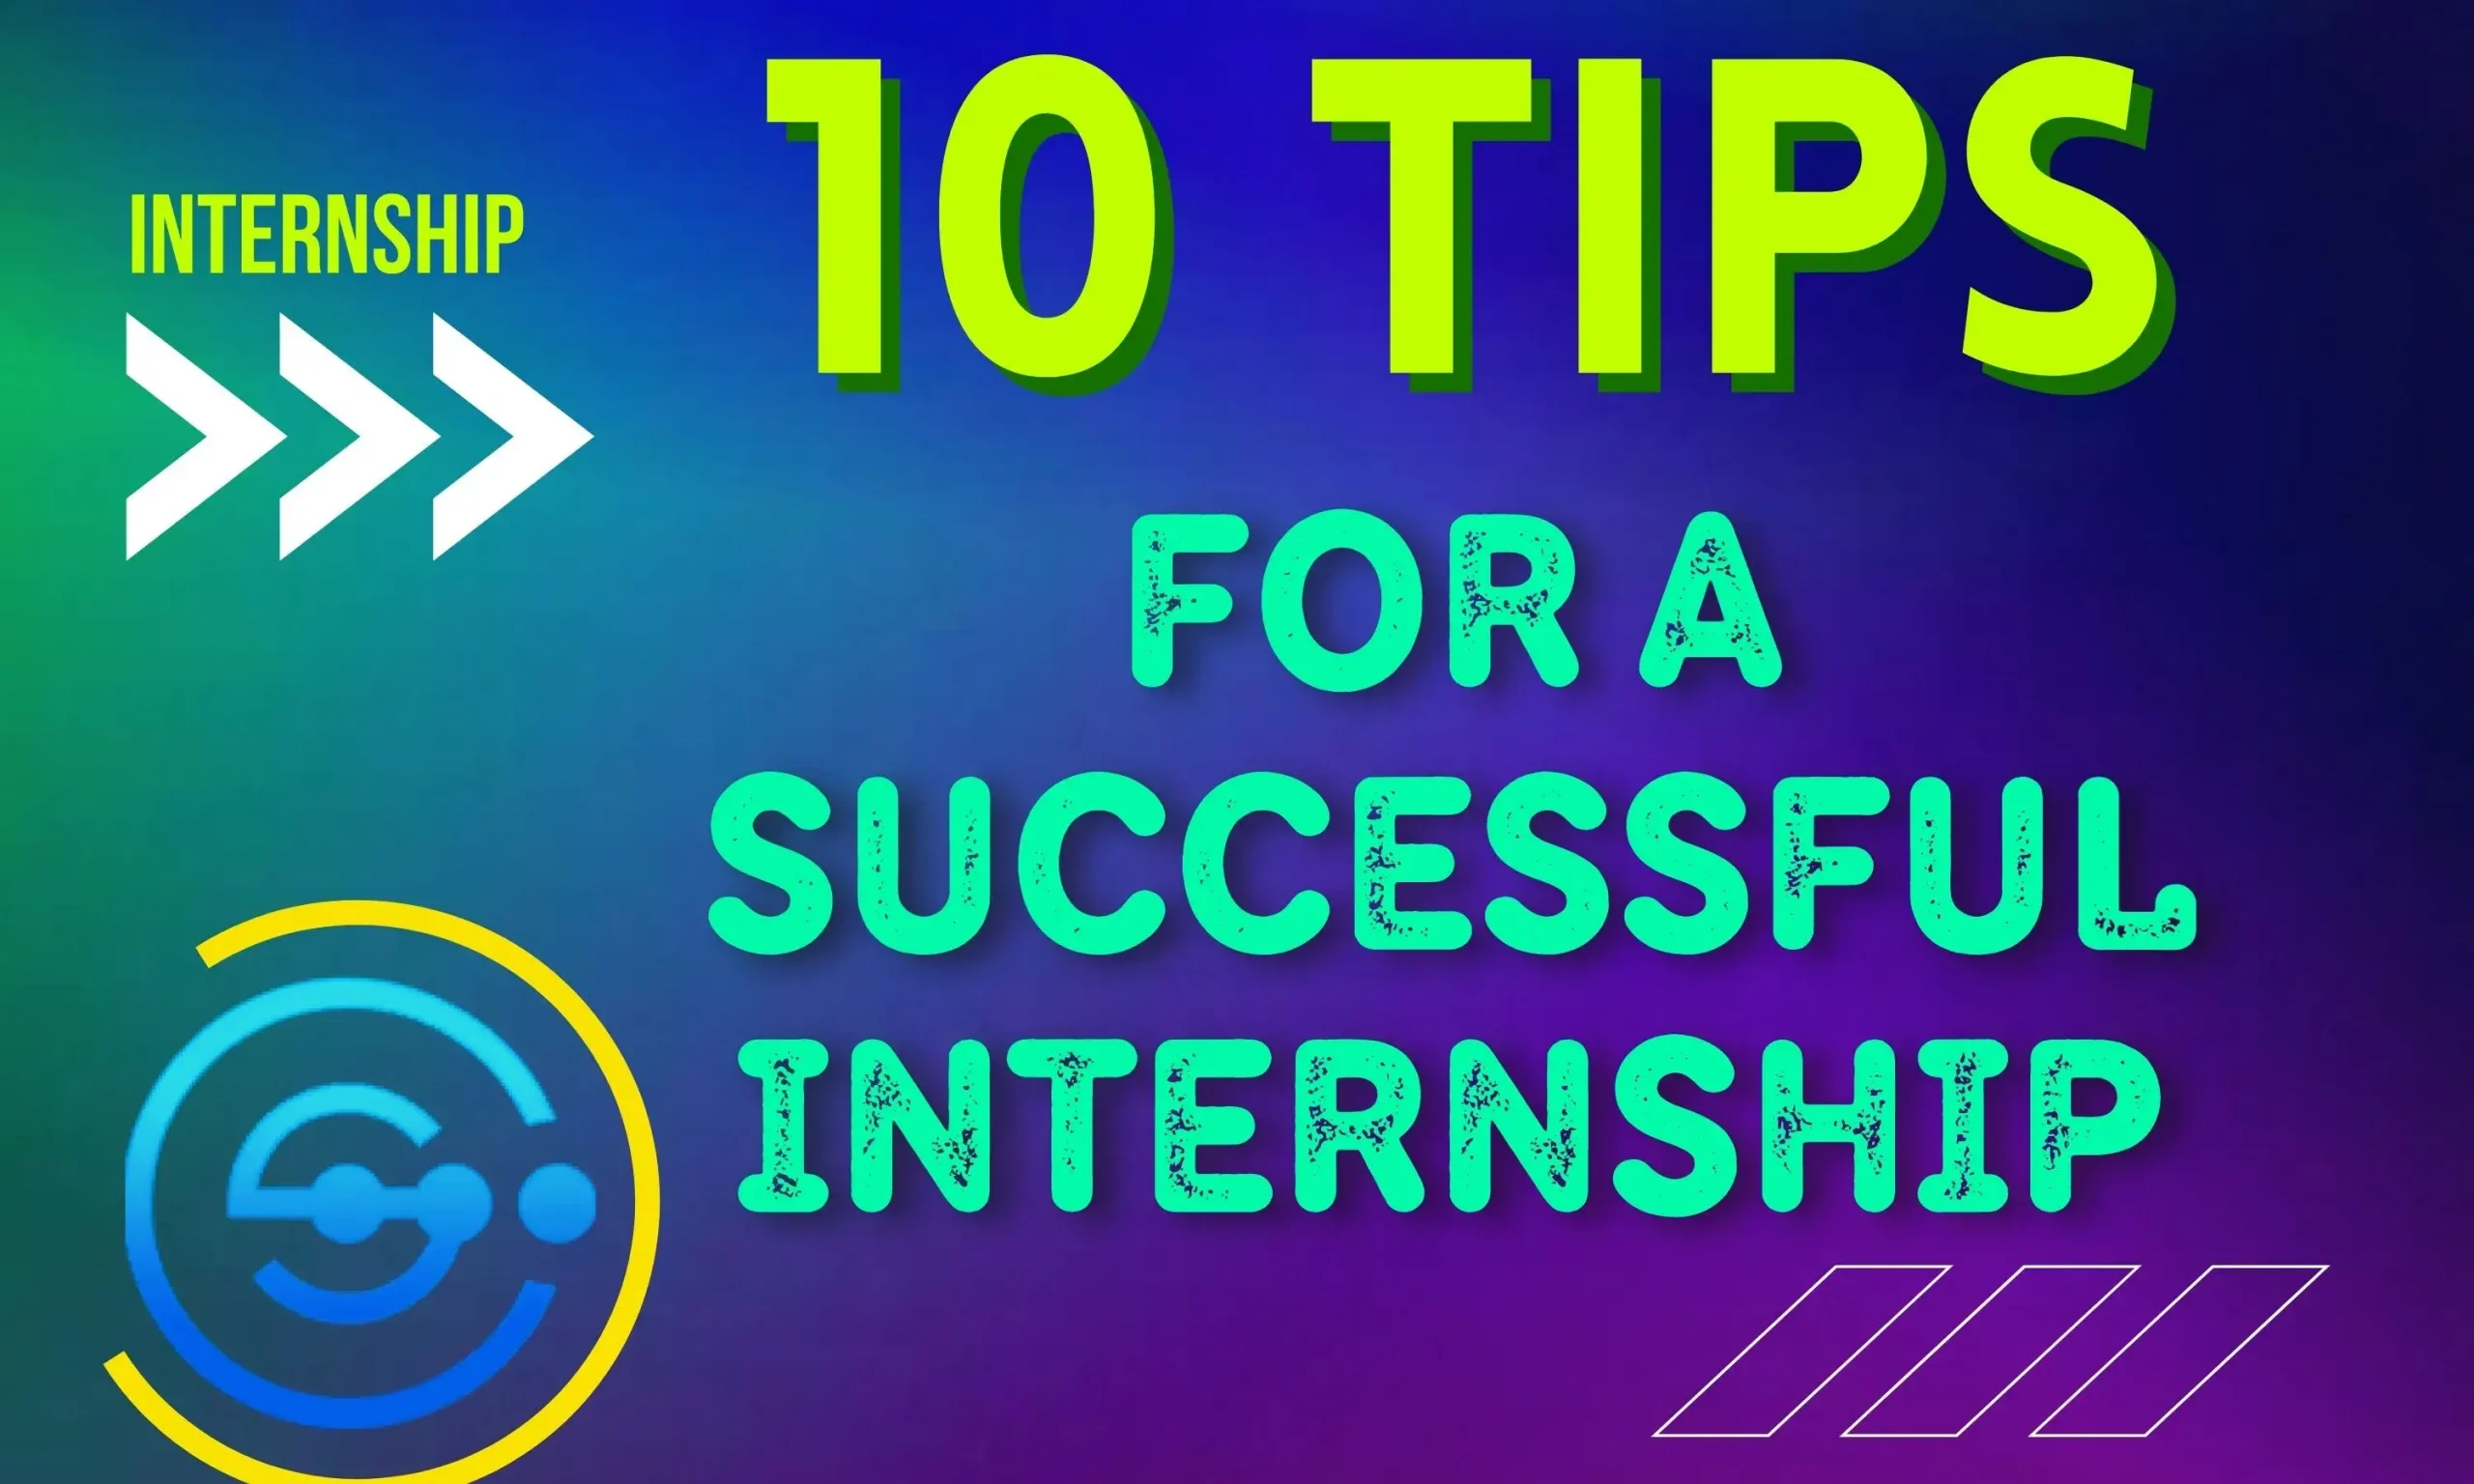 10 Tips for a Successful Internship